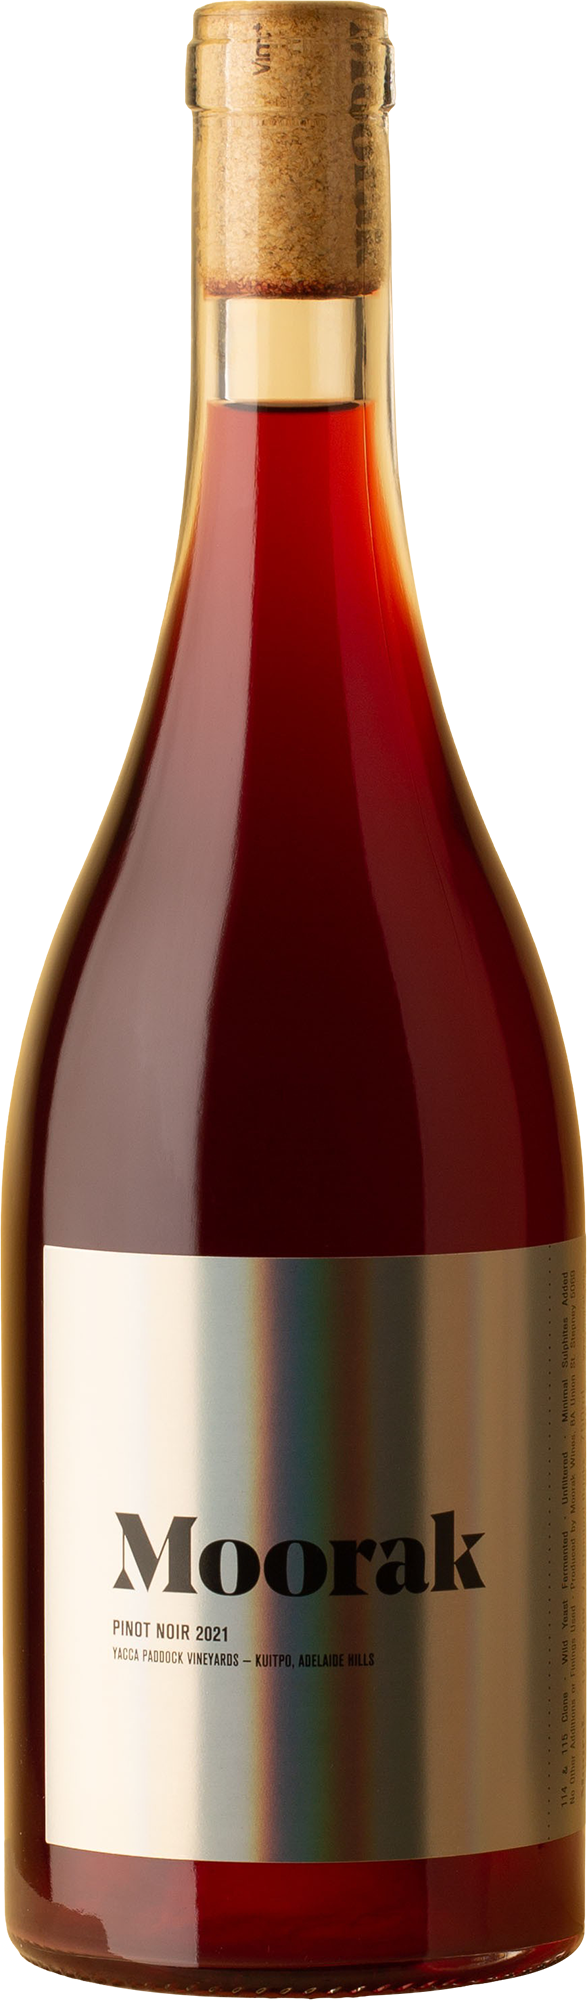 Moorak - Yacca Paddock Vineyards Pinot Noir 2021 Red Wine